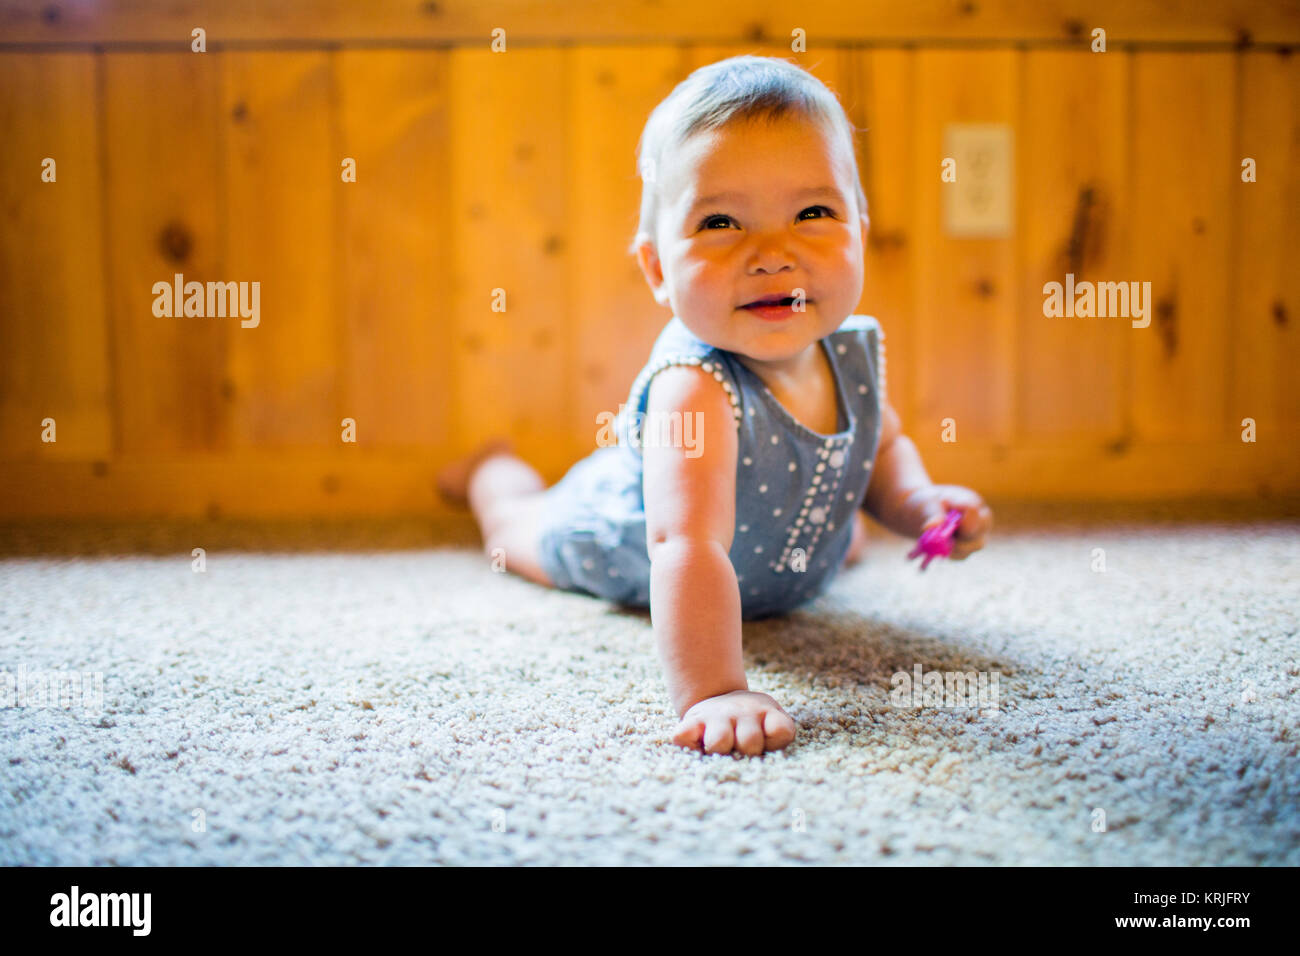 Smiling mixed race baby girl crawling on carpet Stock Photo